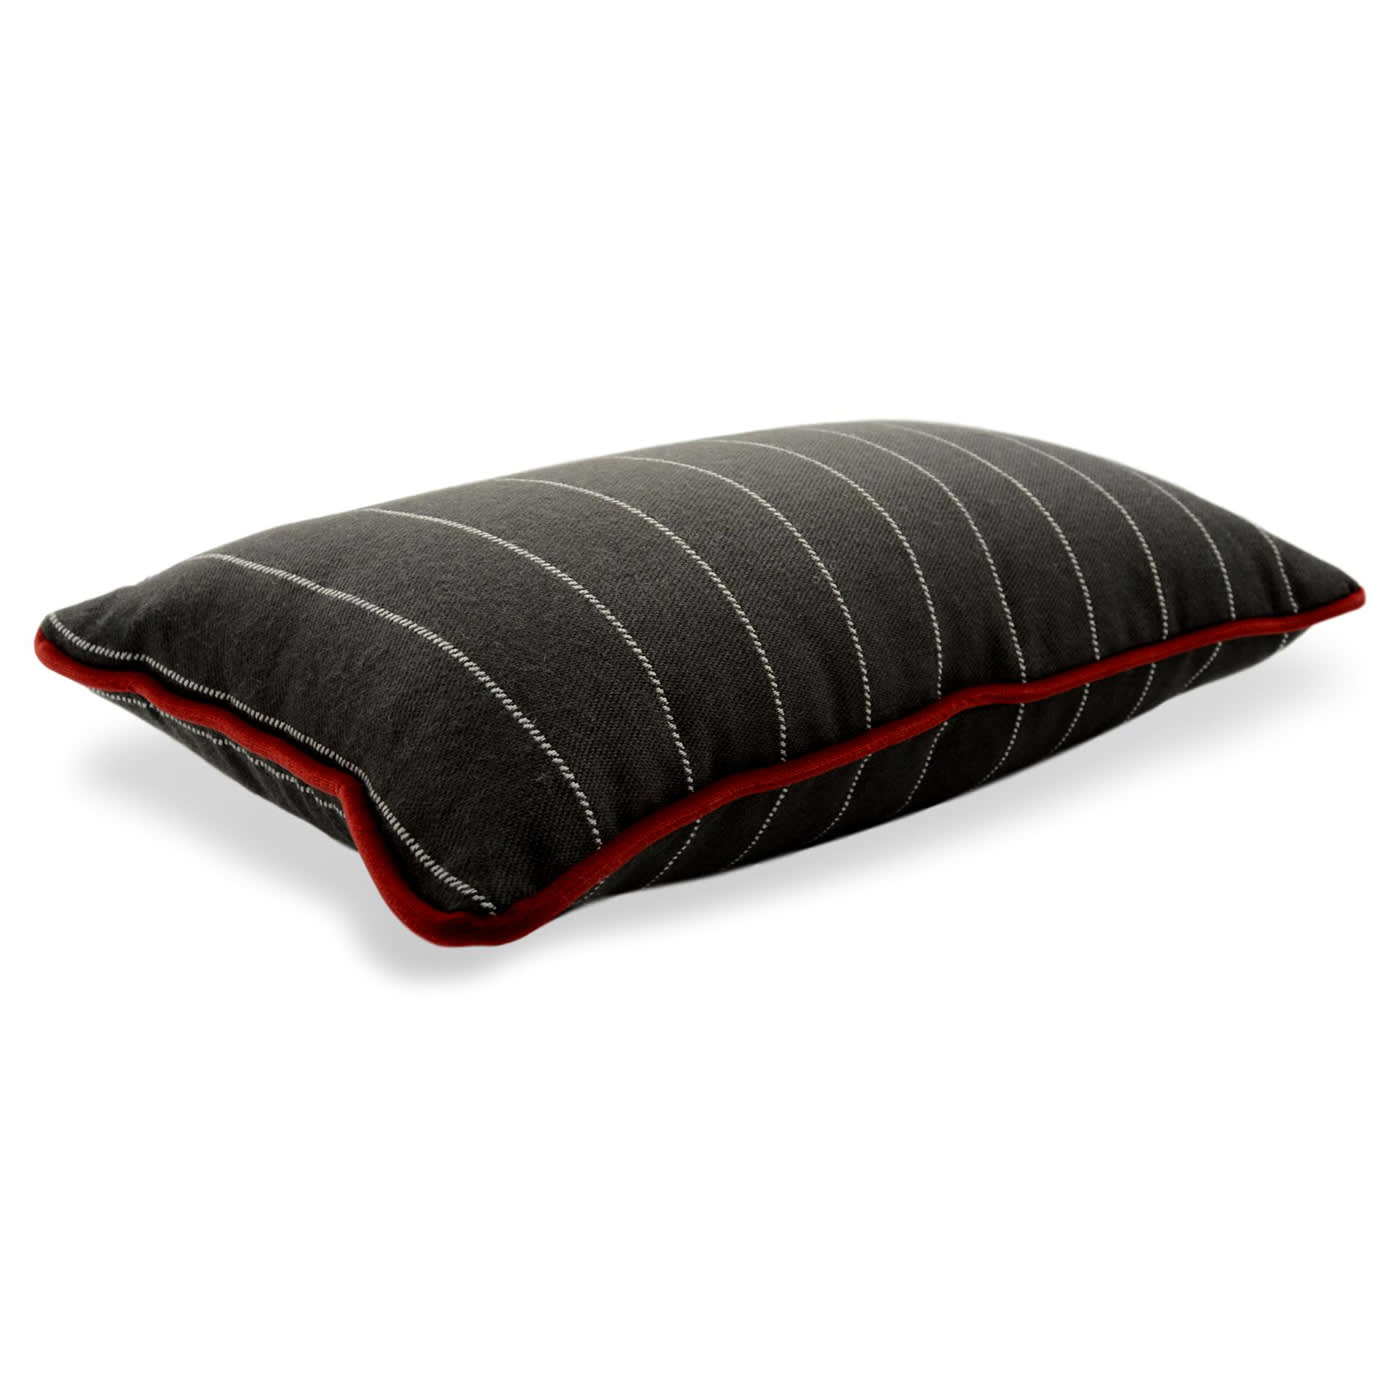 Lounge Striped Cushion with Red Rim - l'Opificio